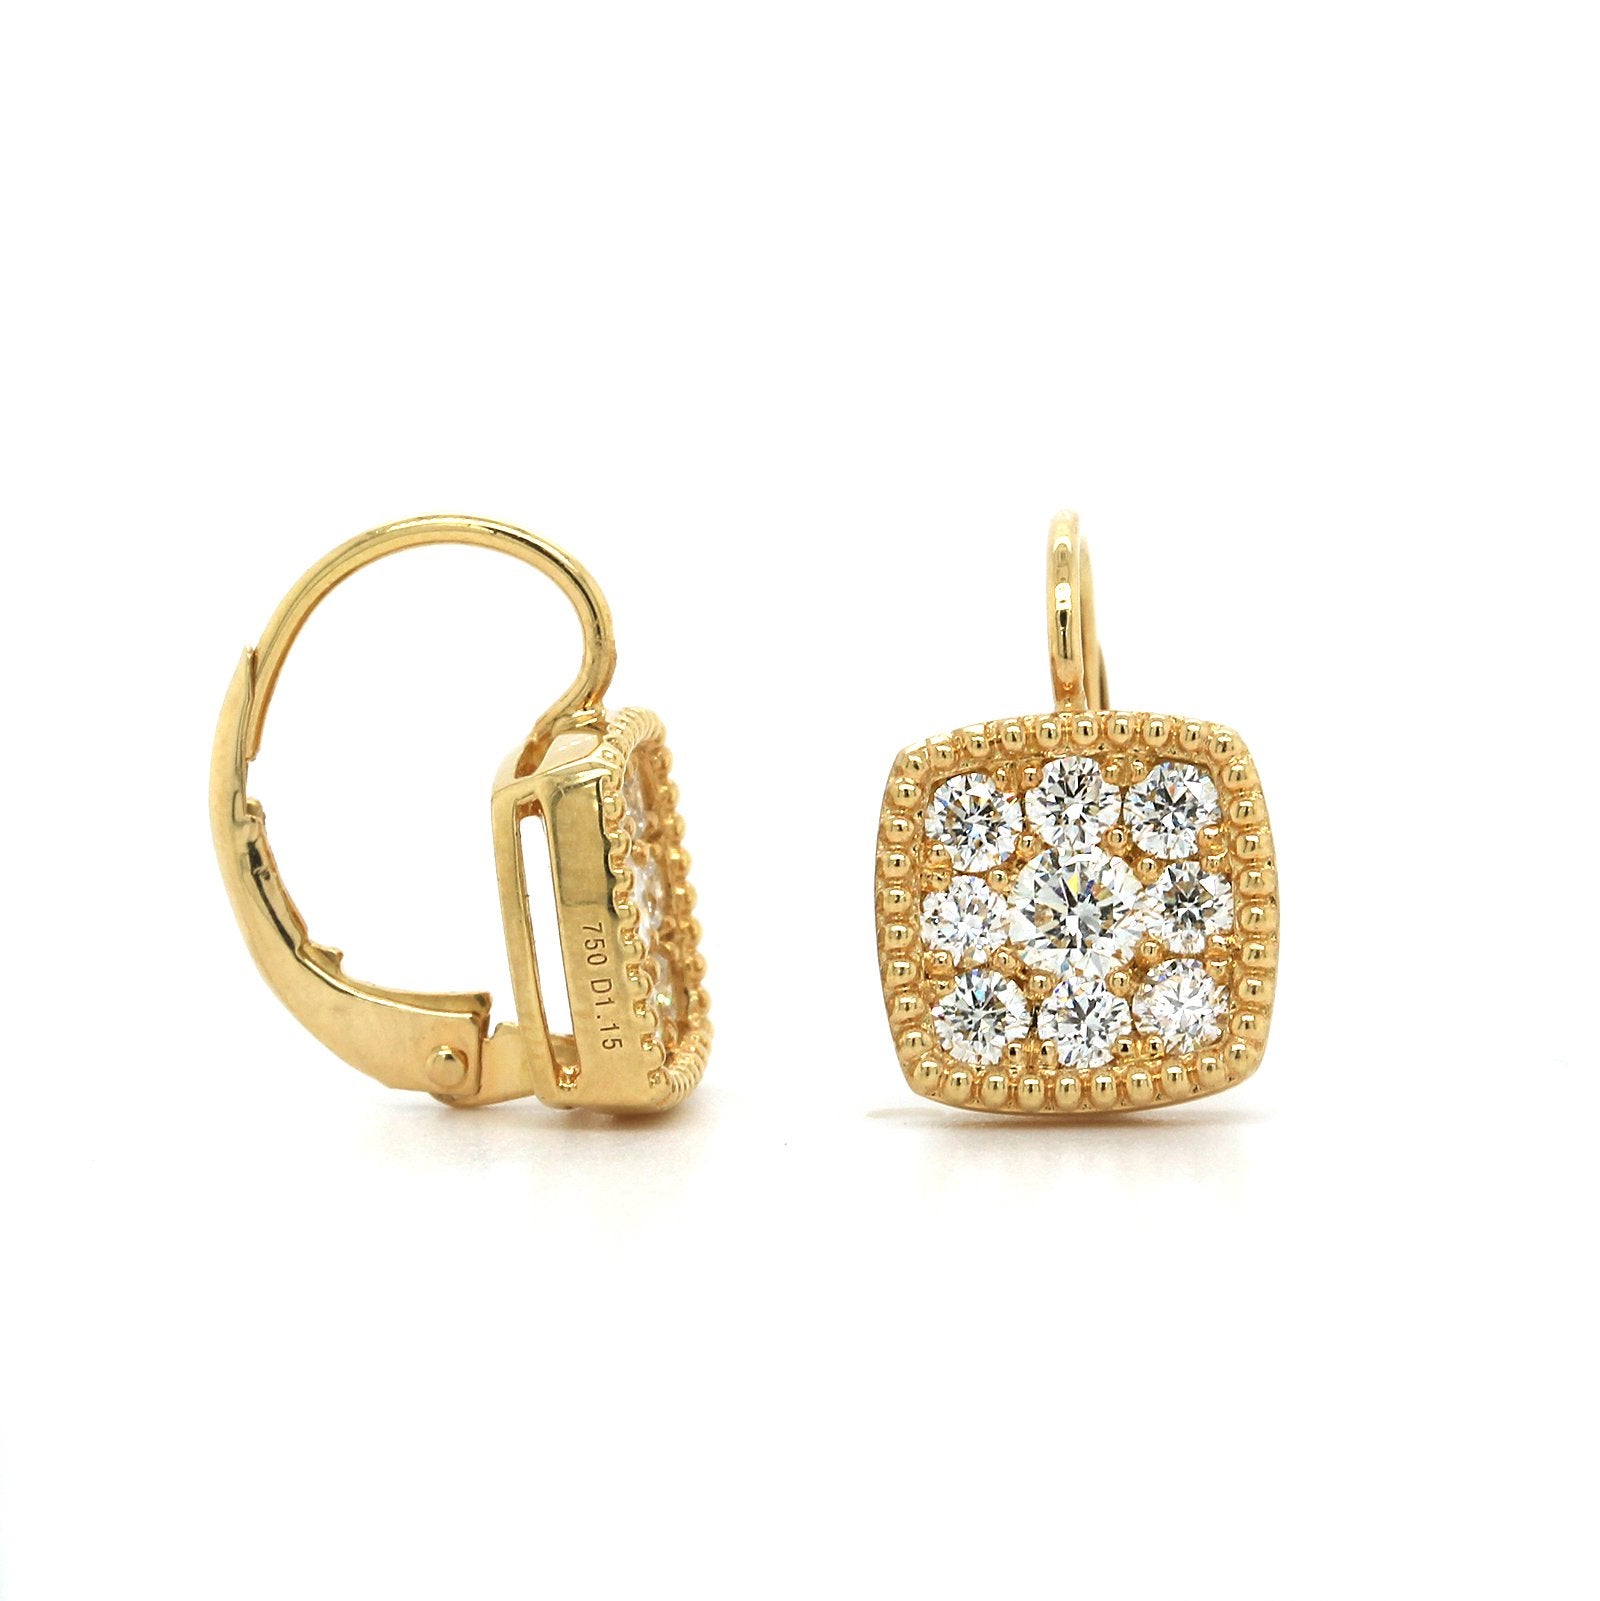 18K Yellow Gold Diamond Earrings with Milgrain, Gold, Long's Jewelers